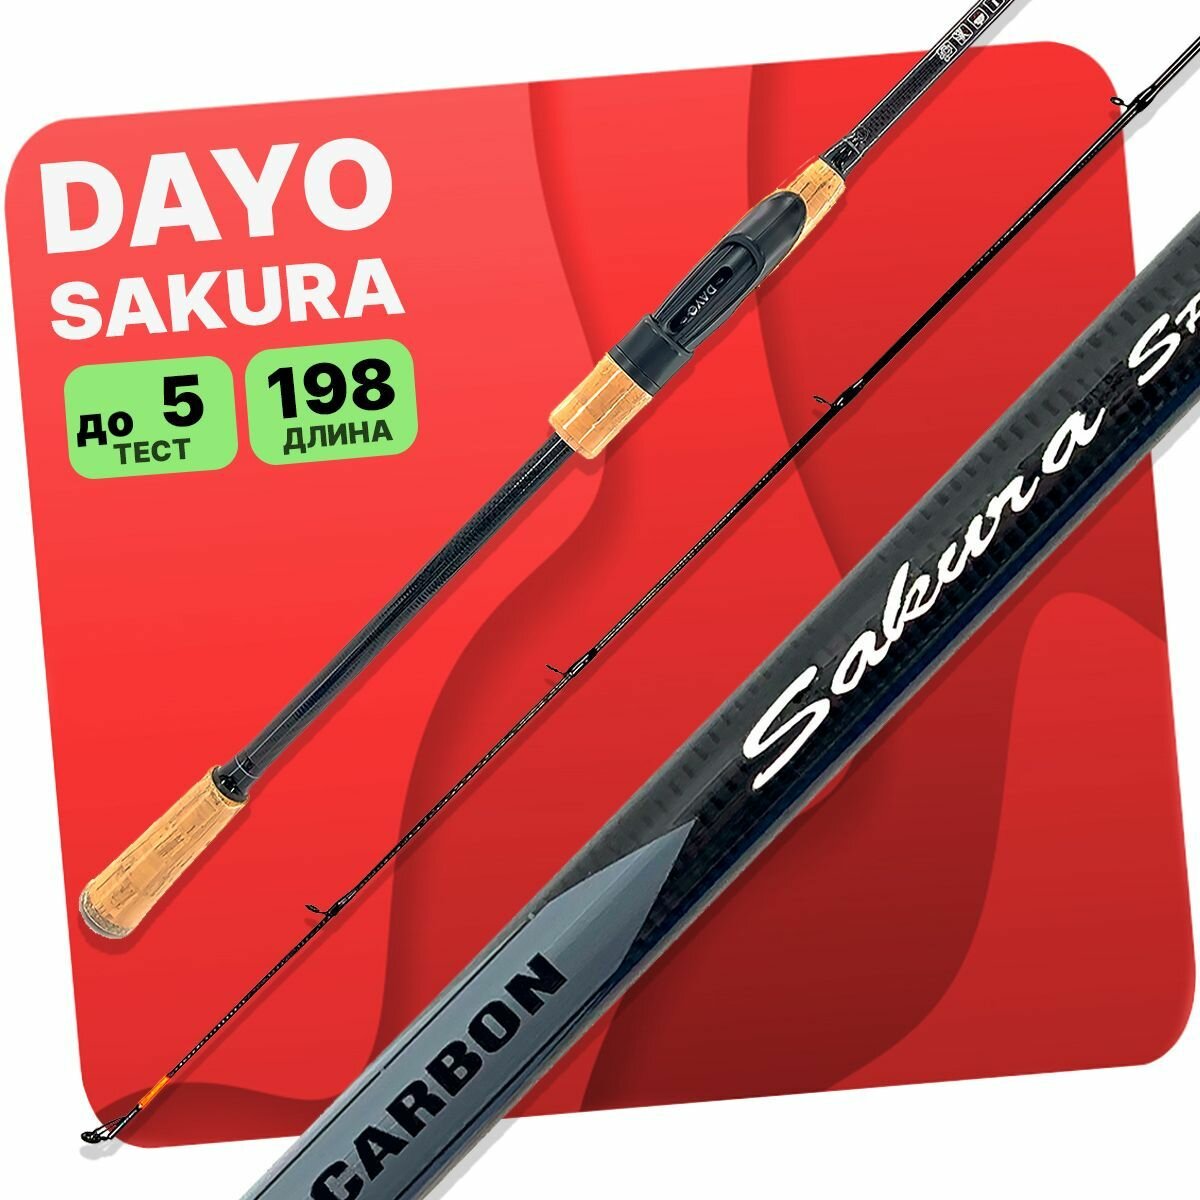 Спиннинг DAYO Sakura 0.5-5g 1.98m